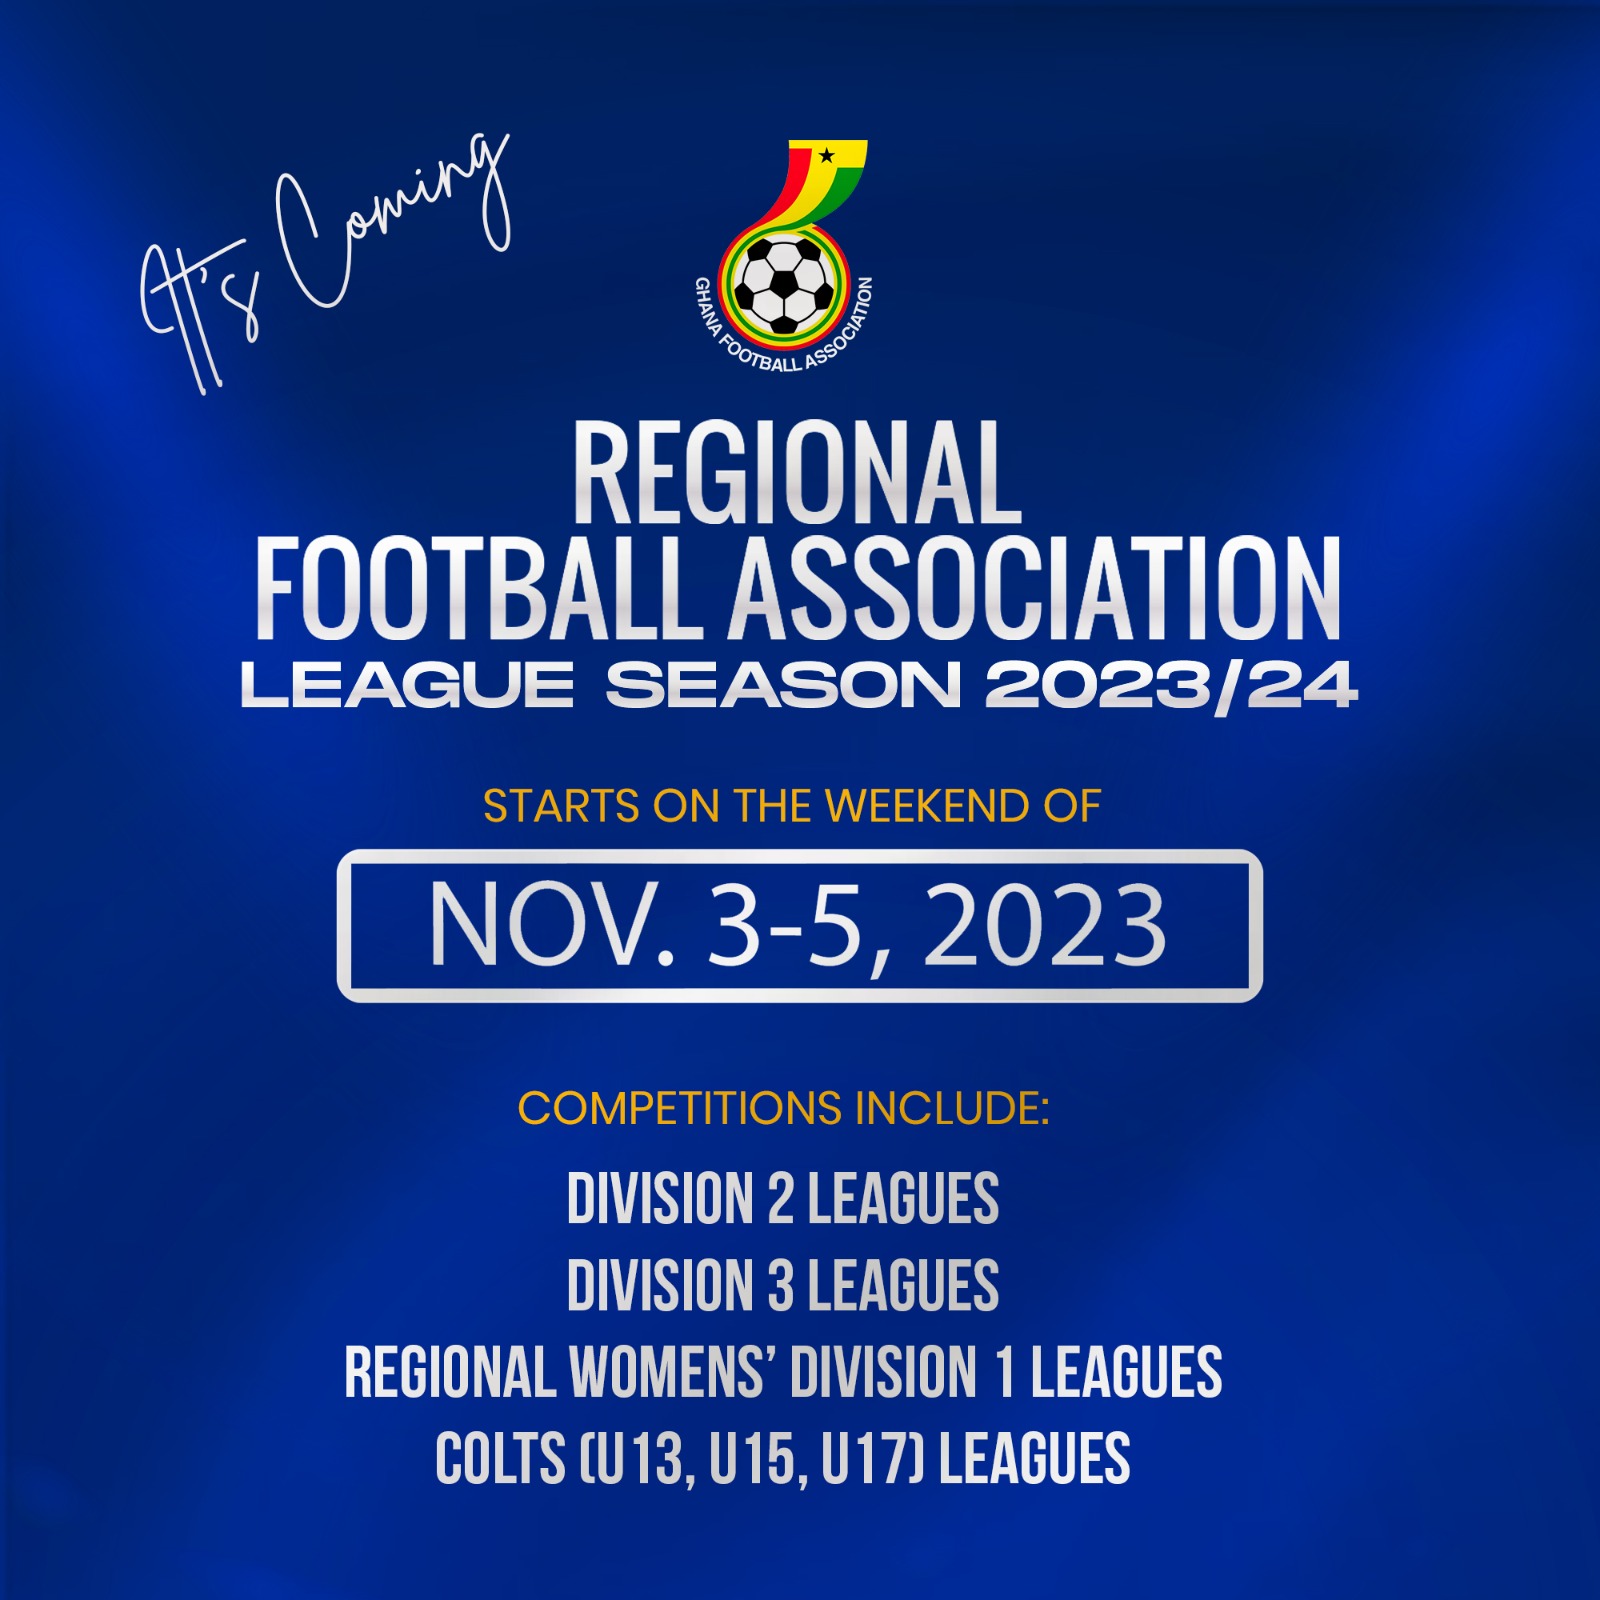 Regional Leagues to kick start 2023/24 season November 3-5